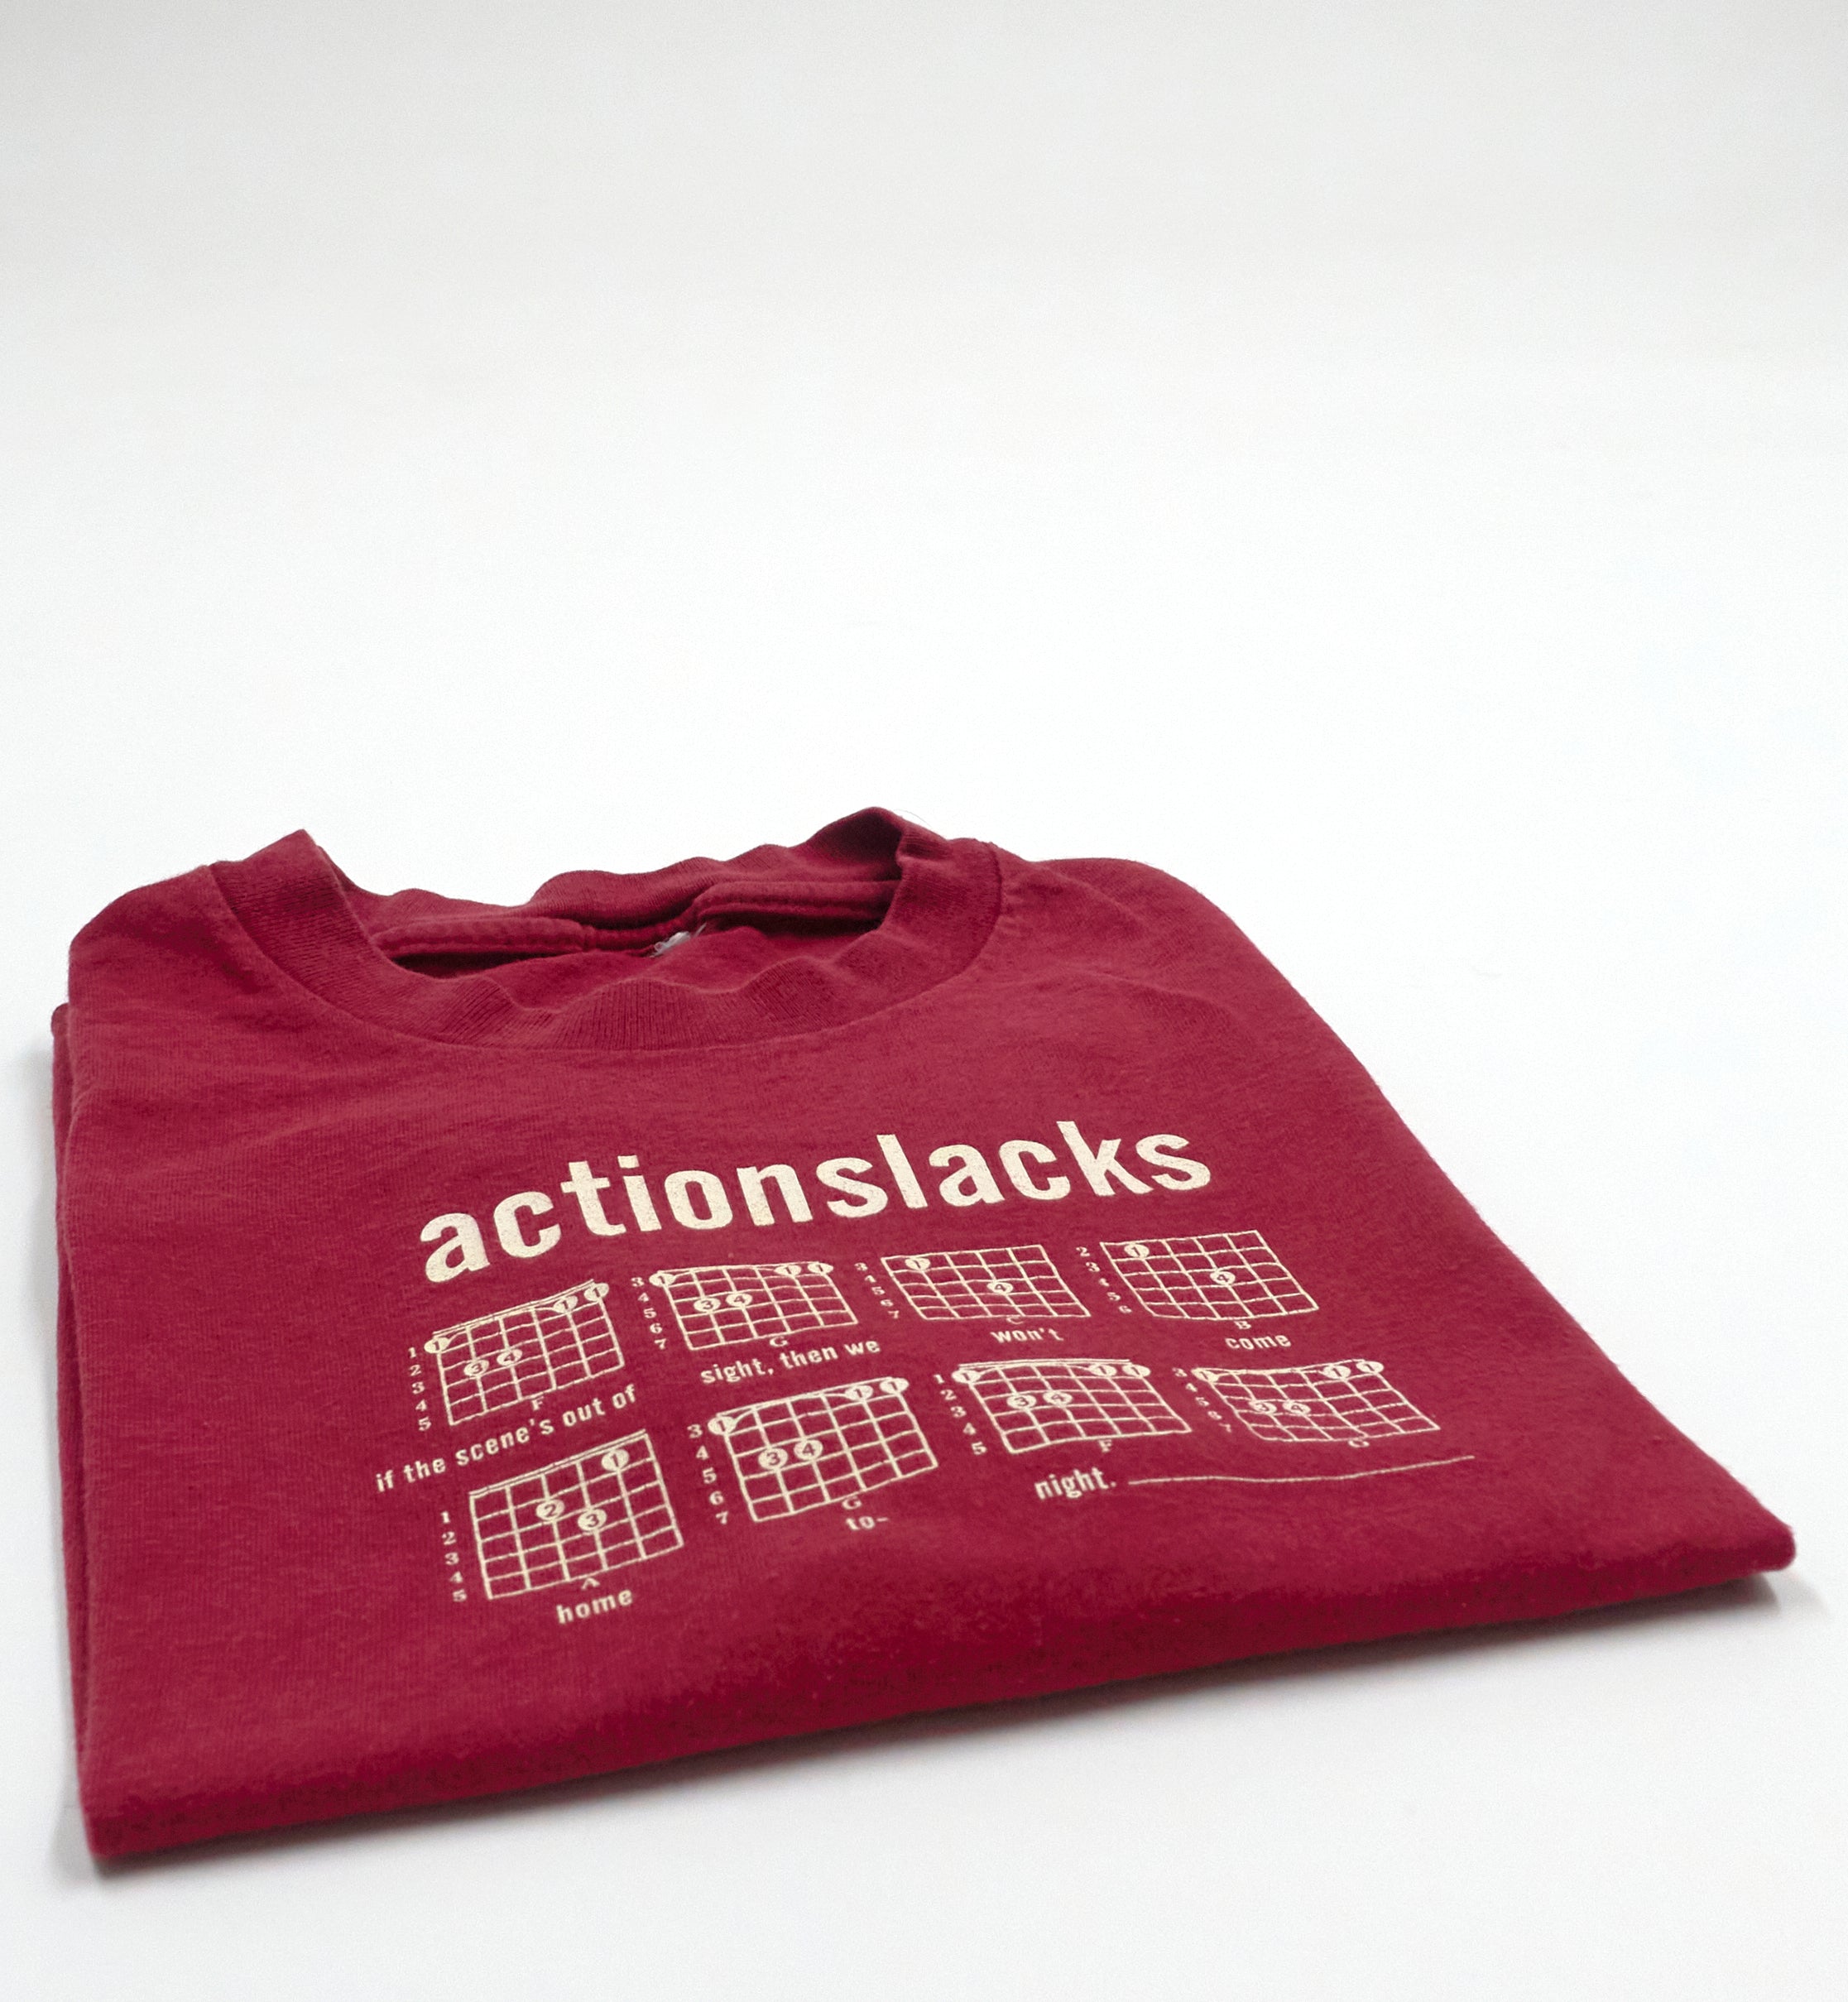 Actionslacks – Scene's Out Of Sight / 23 Steps Spring 2001 Tour Shirt Size Medium